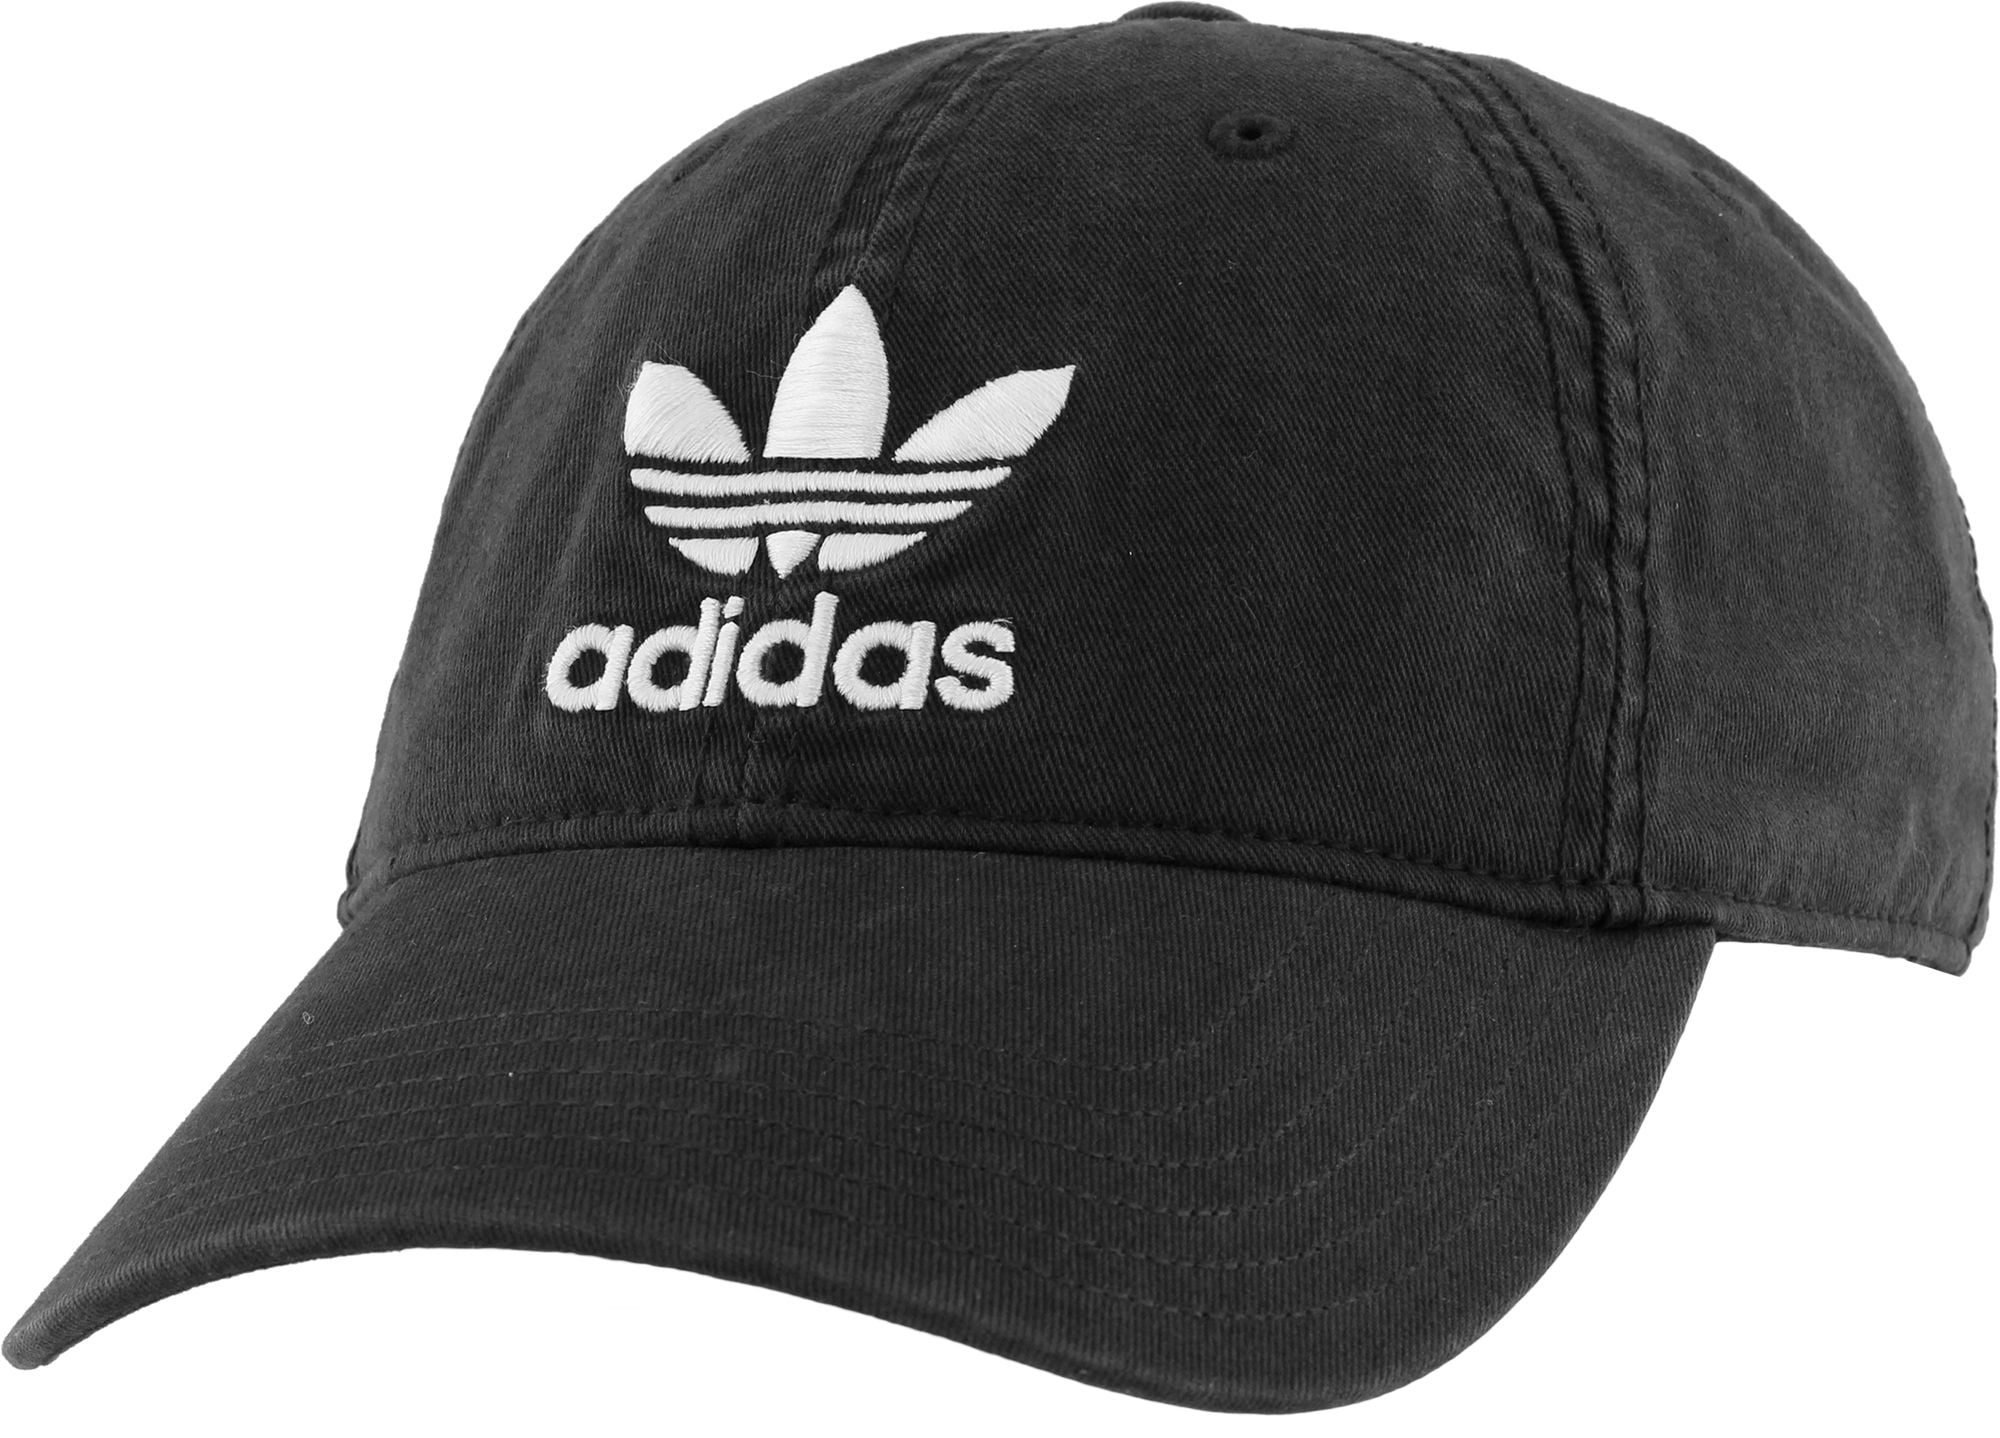 adidas Men's Originals Relaxed Hat 